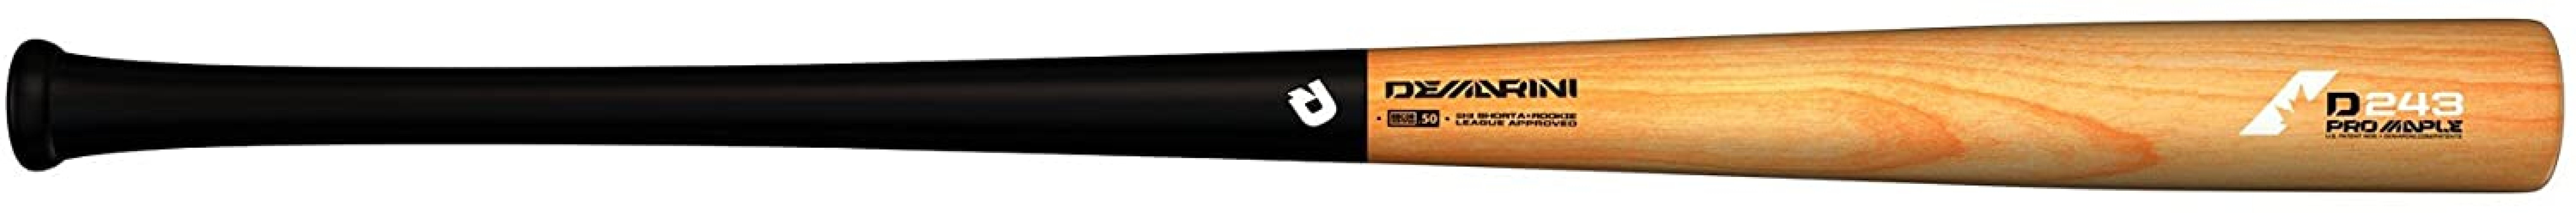 DeMarini 2018 D243 Pro Maple Wood Composite Baseball Bat 